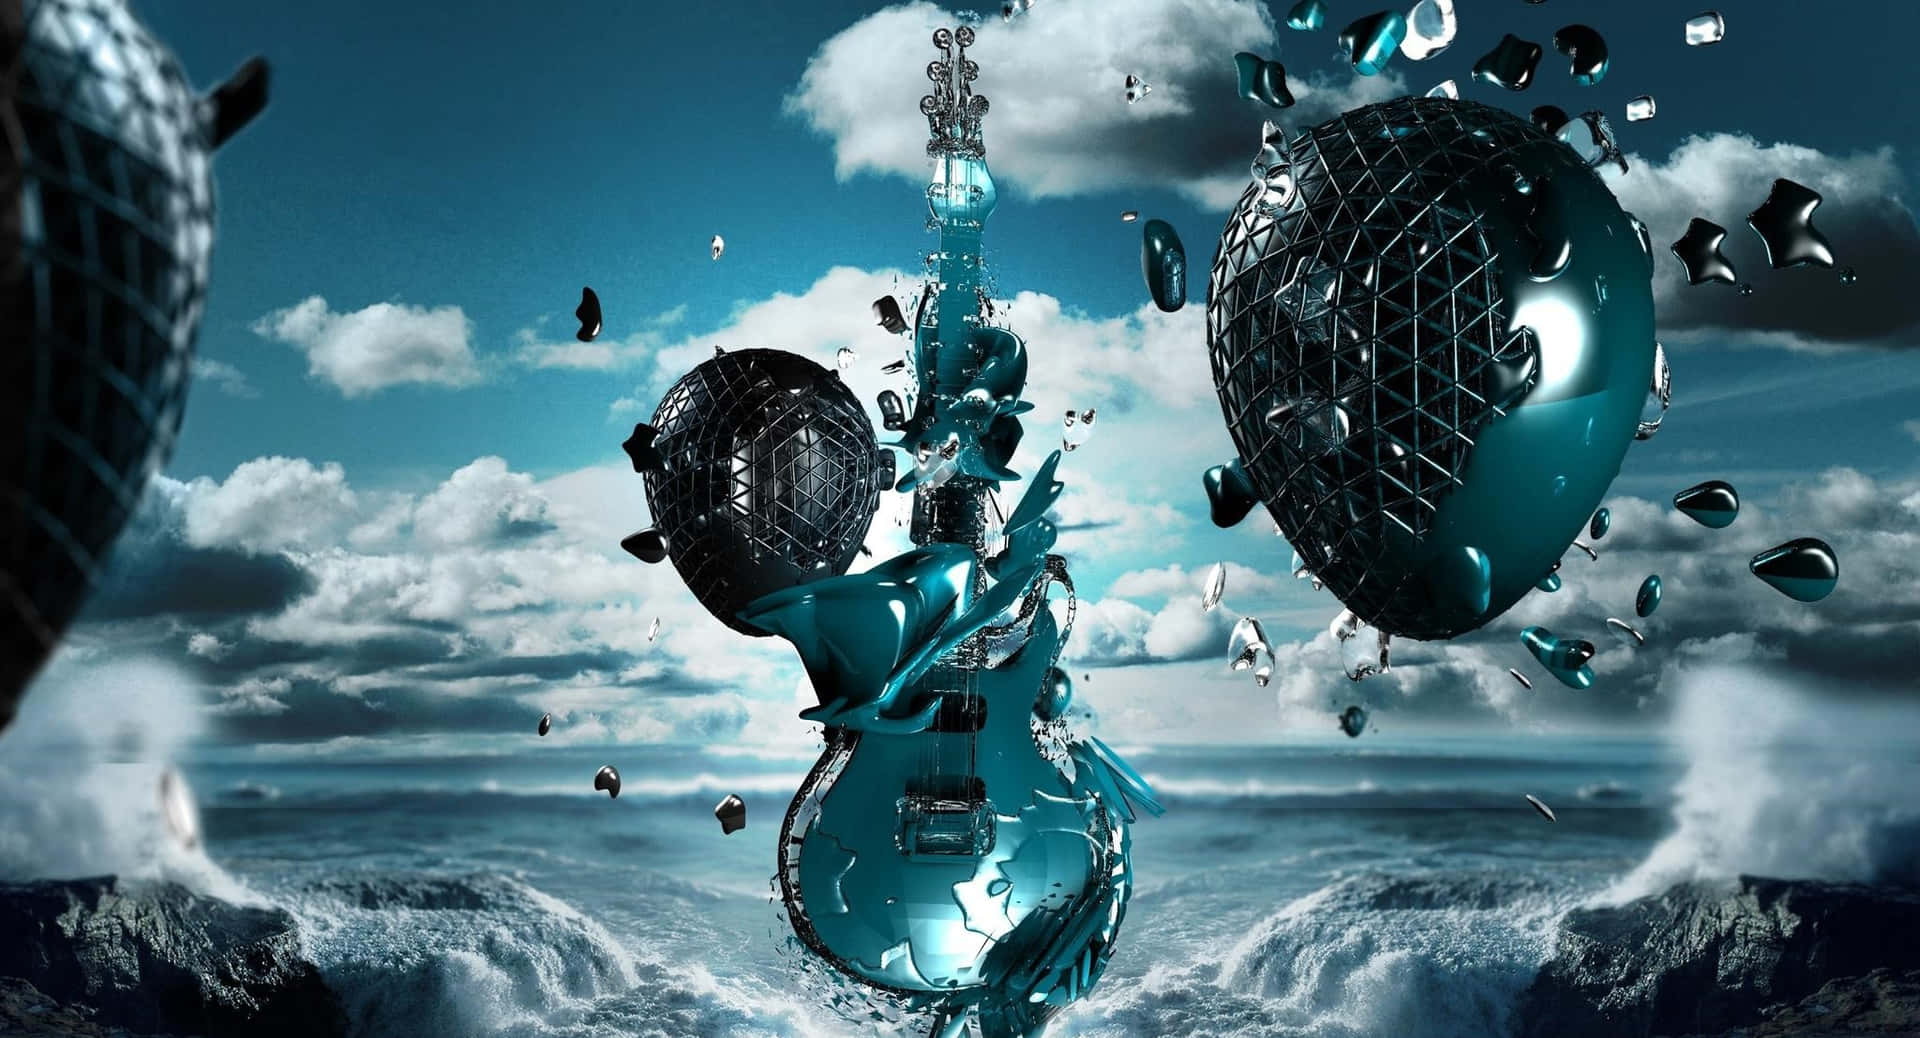 Surreal Rock Guitar Explosion Wallpaper